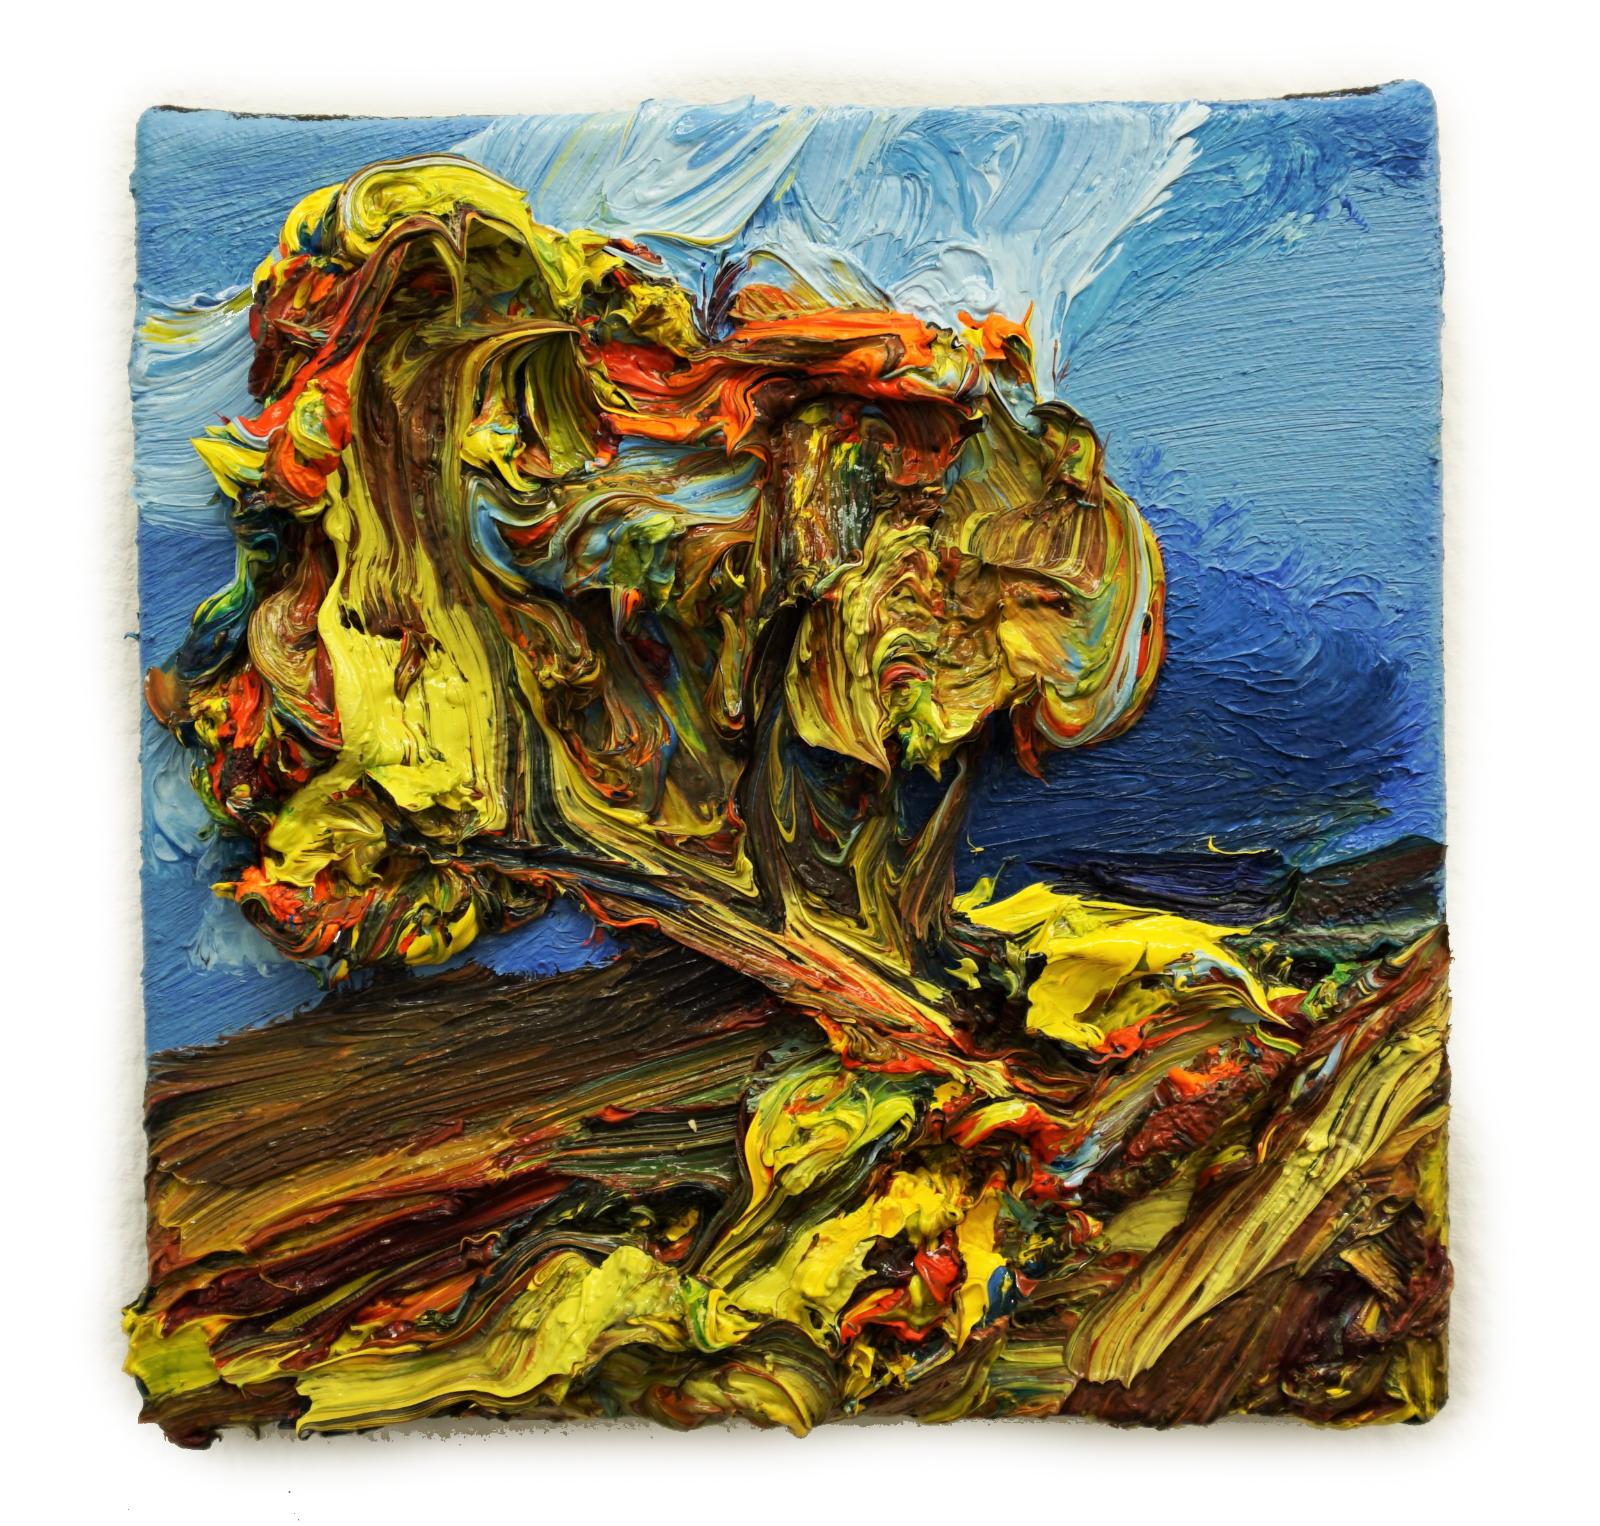 Harry Meyer, Baum, 2020, Öl auf Leinwand, 20 x 20 cm, meh002ko